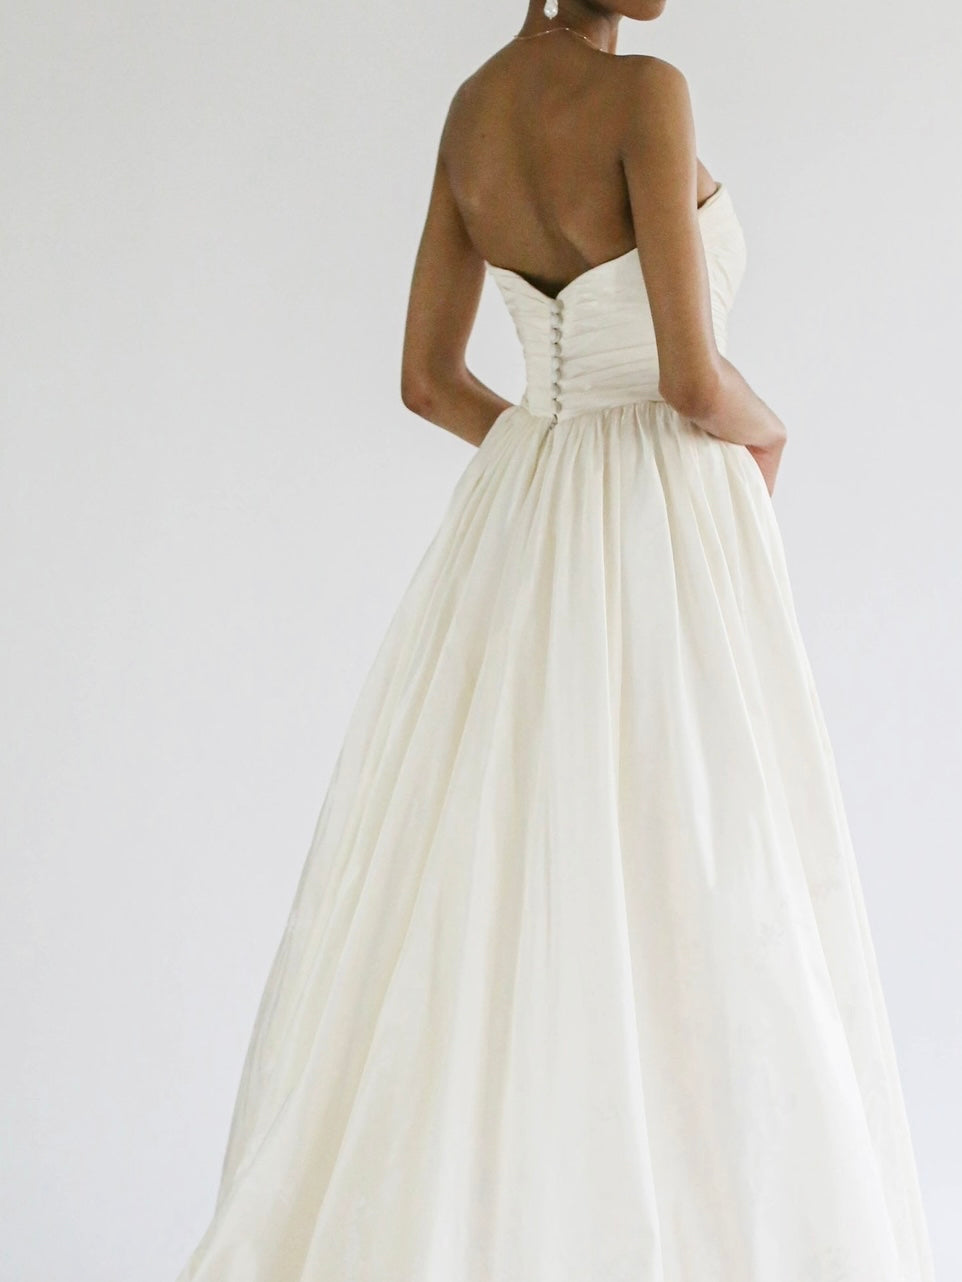 Back View of Bespoke Strapless Wedding Dress